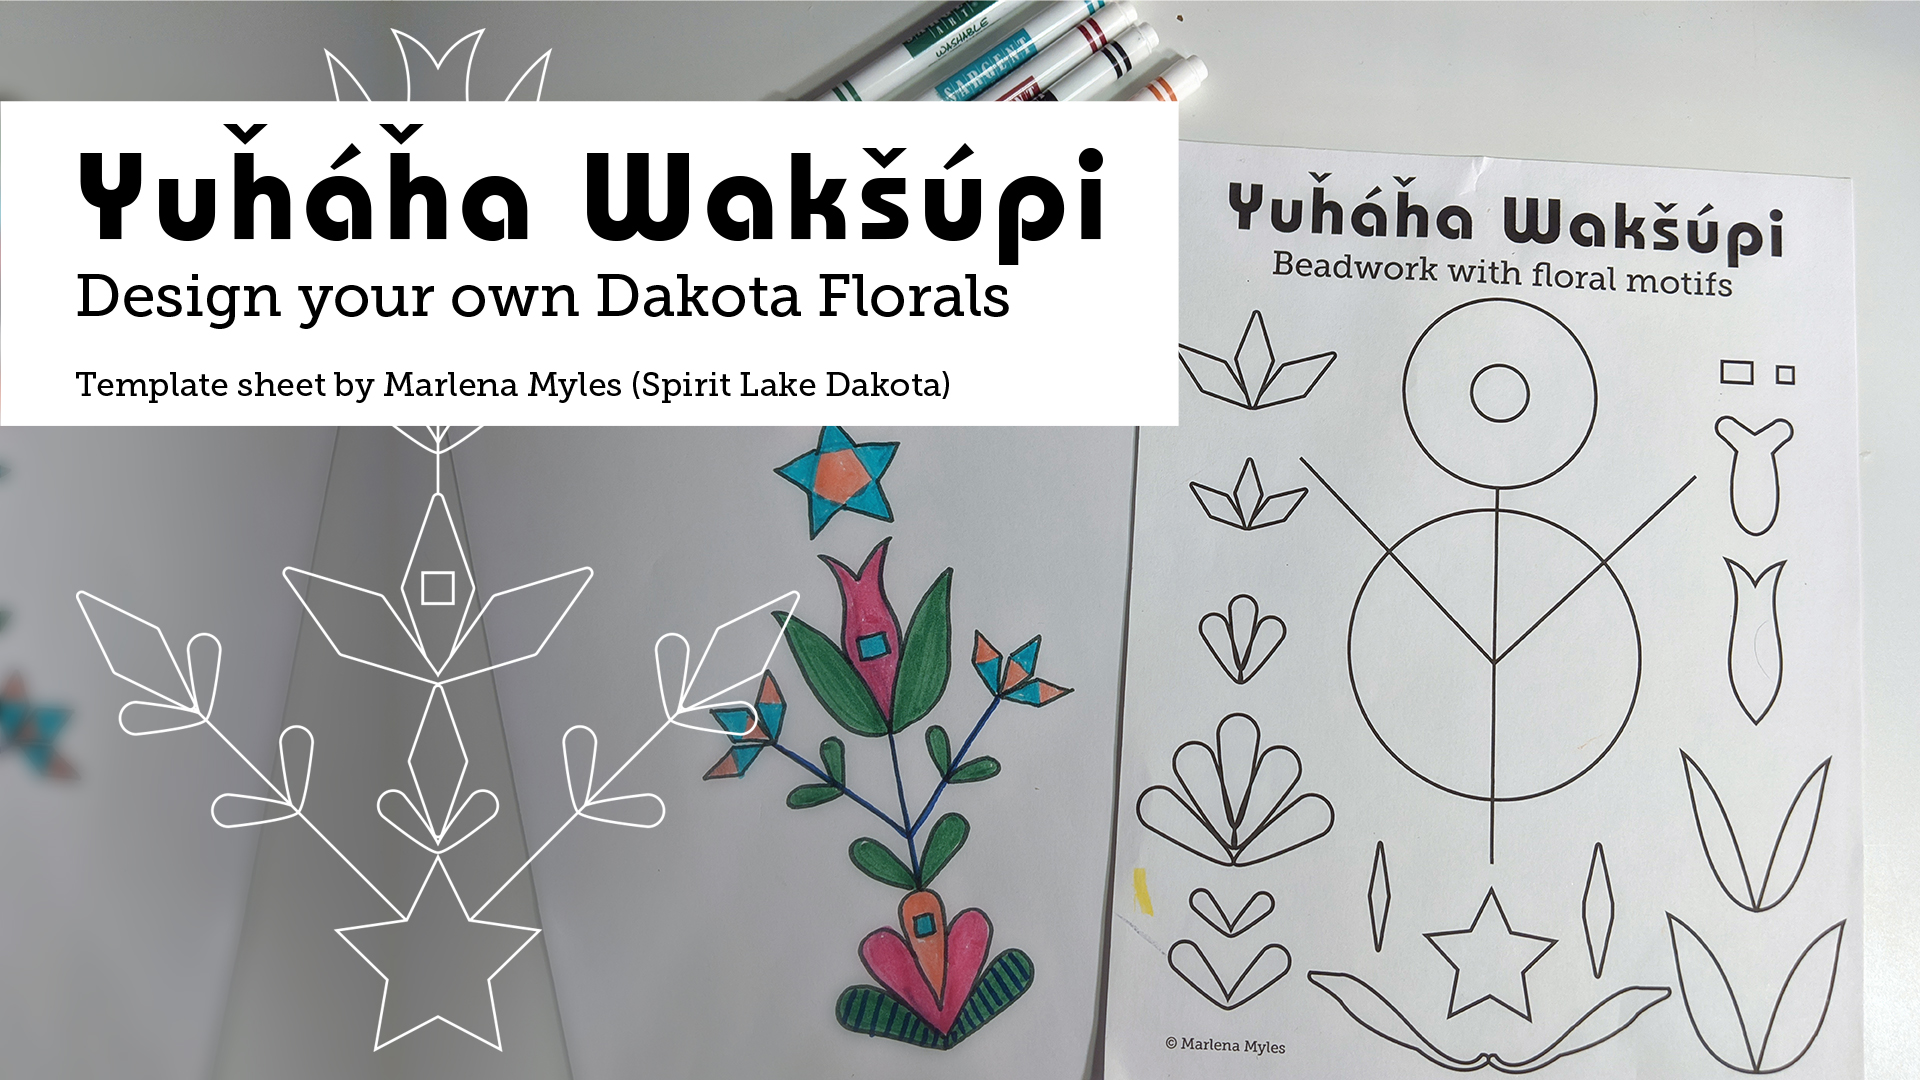 Design your own Dakota Floral worksheet